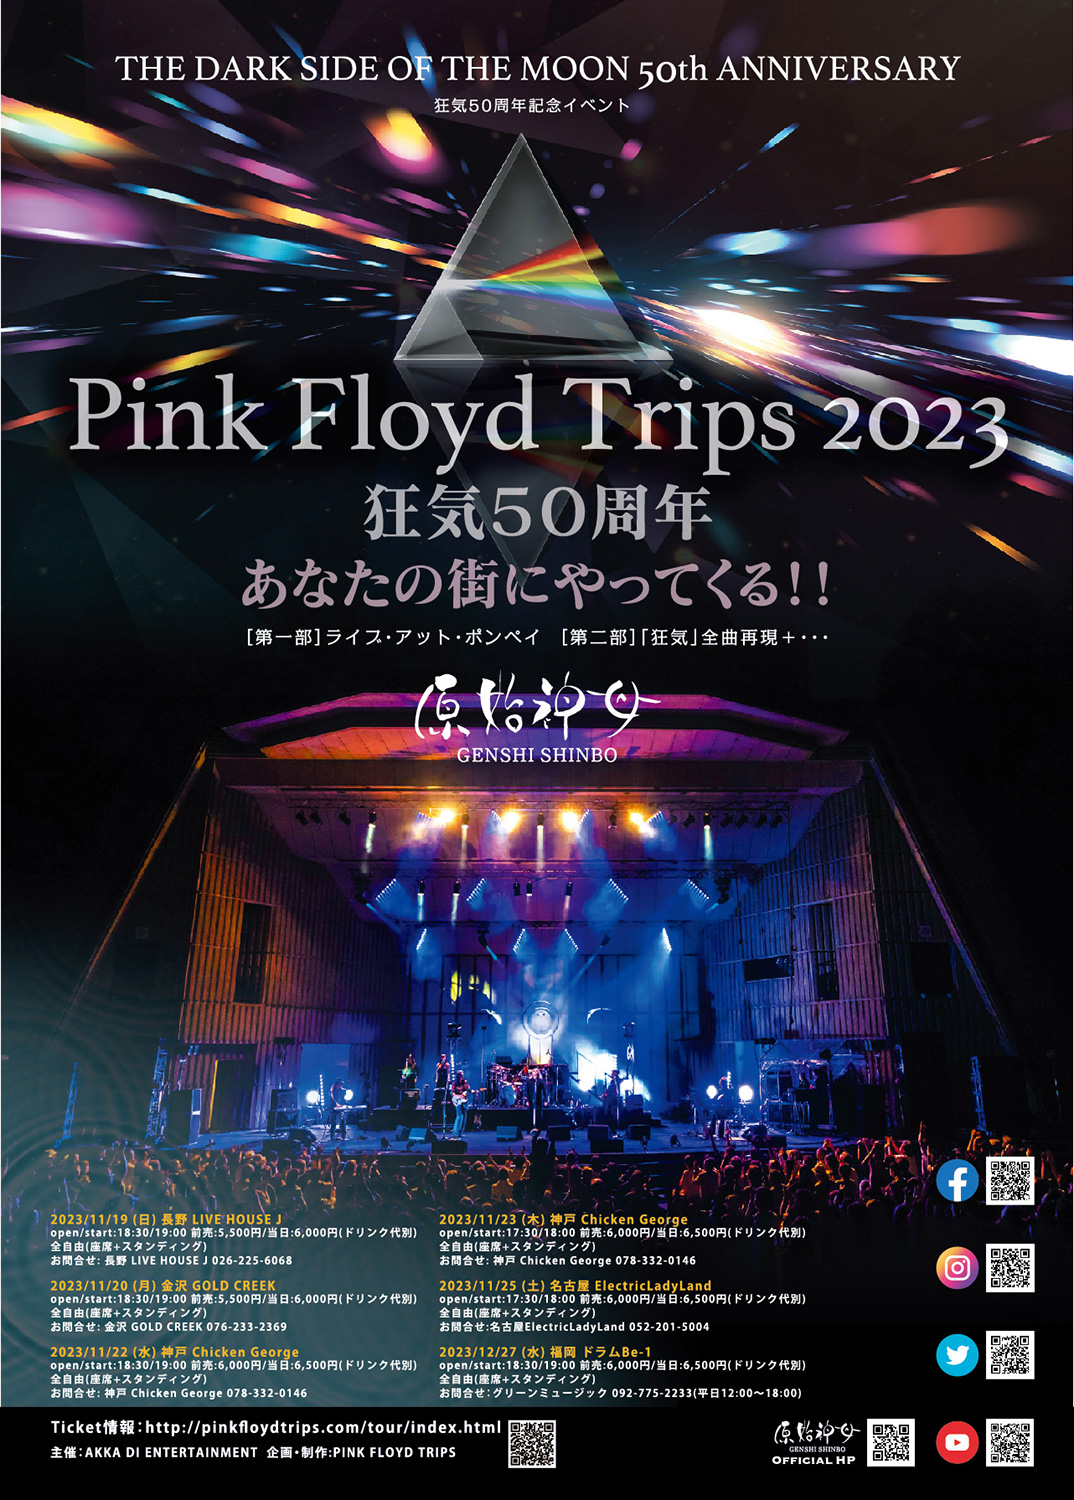 PINK FLOYD TRIPS 2023『狂気』50周年記念イベント
〜あなたの街にやってくる！〜